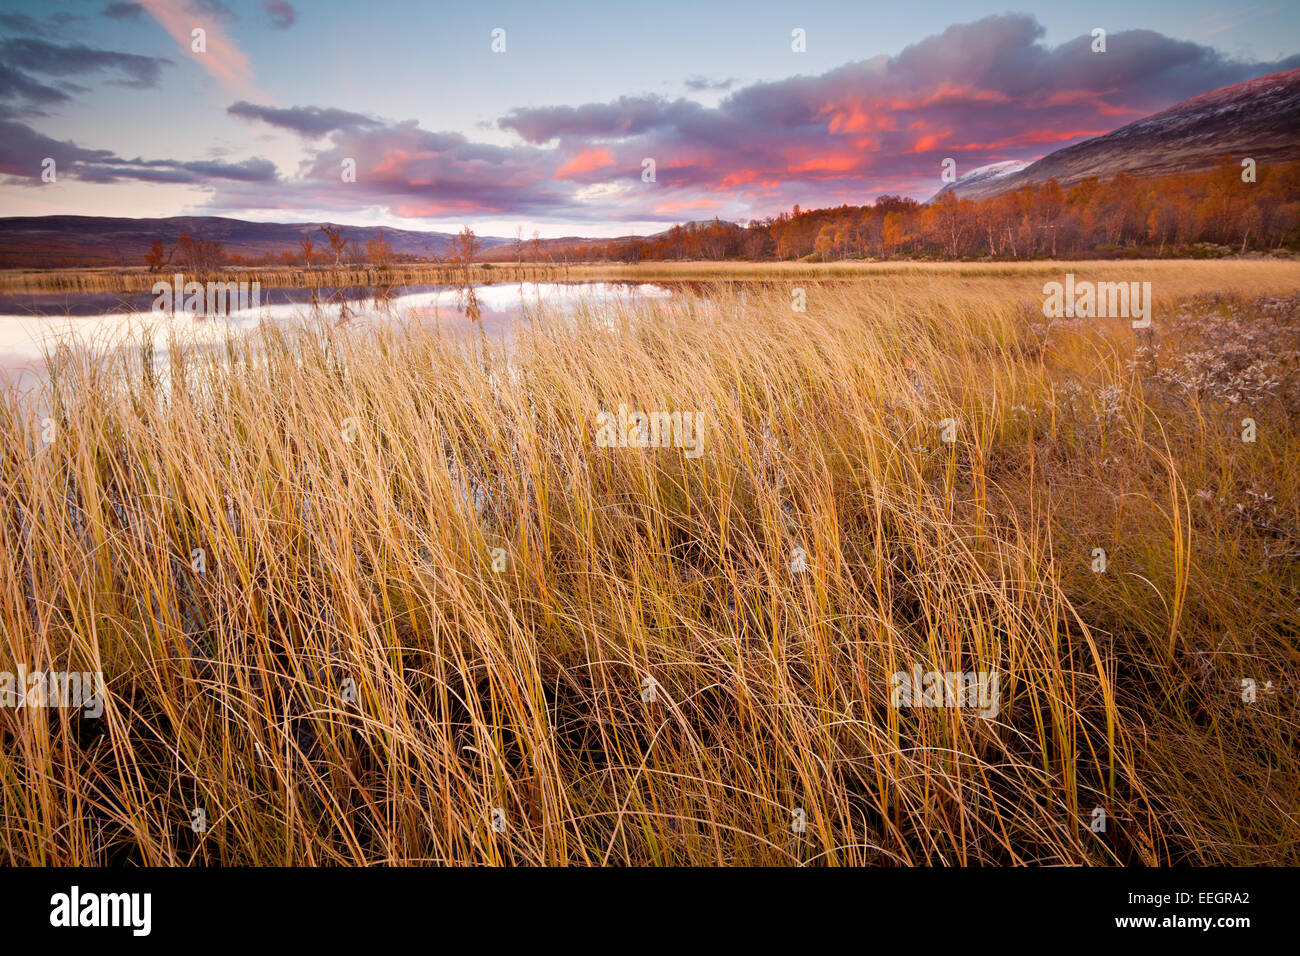 Colorful autumn evening at Fokstumyra nature reserve in Dovre kommune, Oppland fylke, Norway. Stock Photo